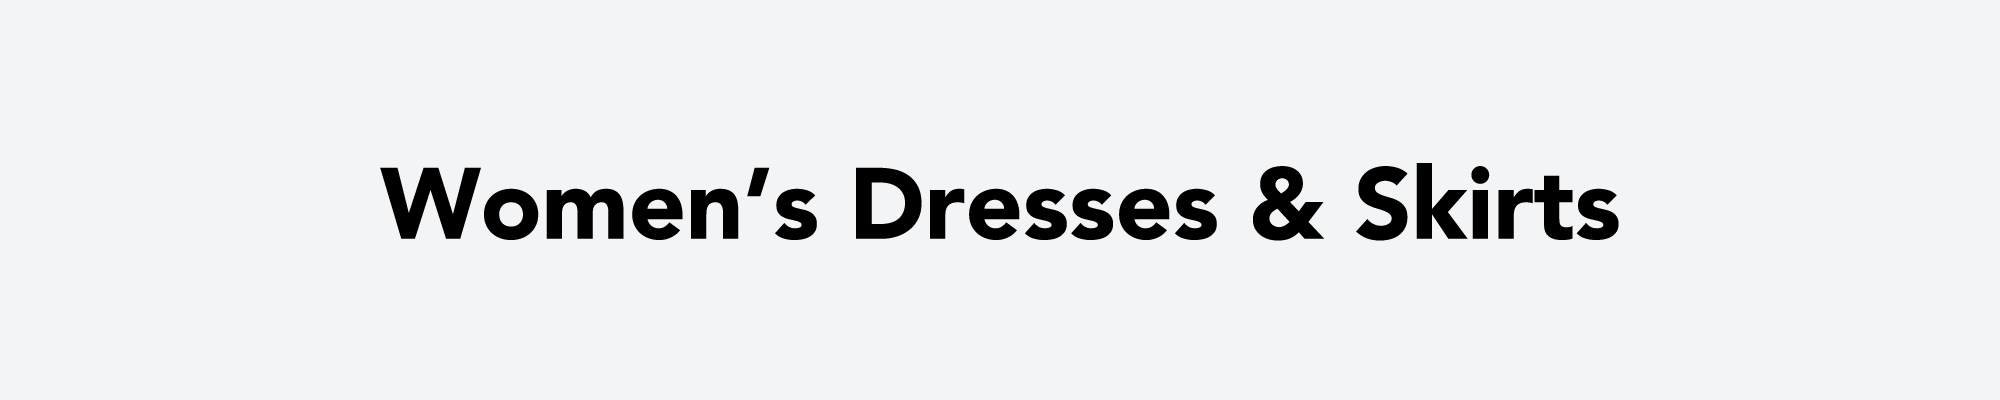 Women's Dresses & Skirts